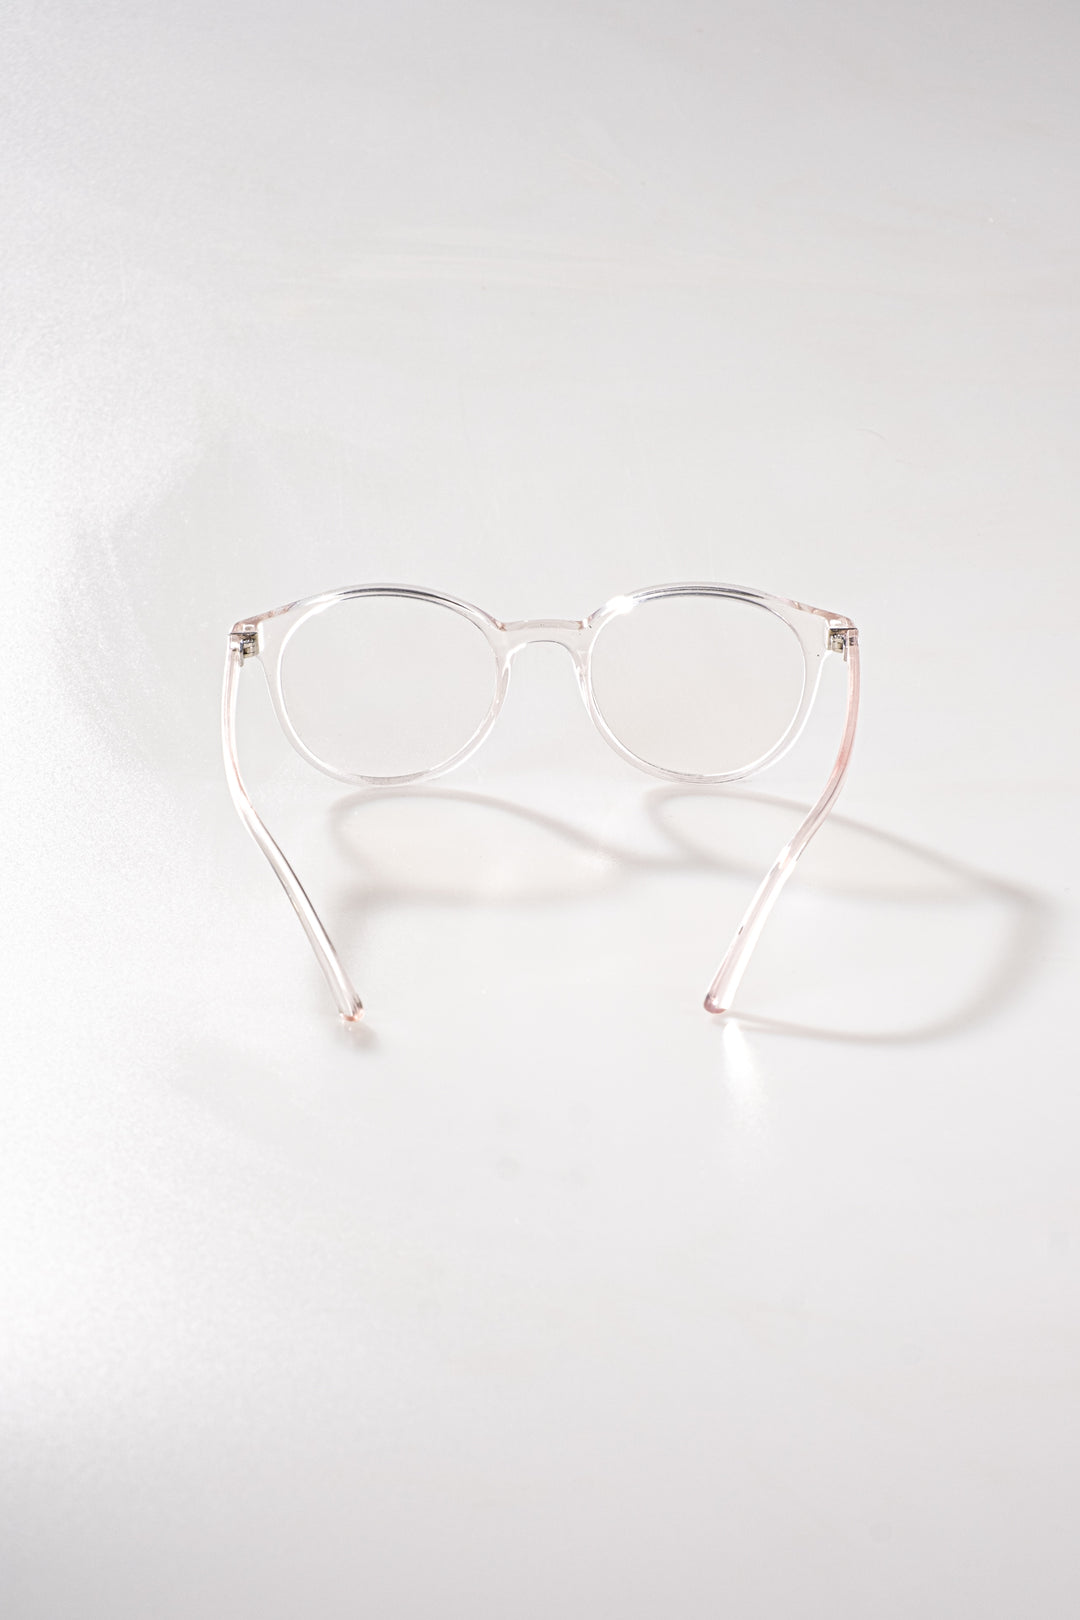 Flexible Blue Light Protection Glasses